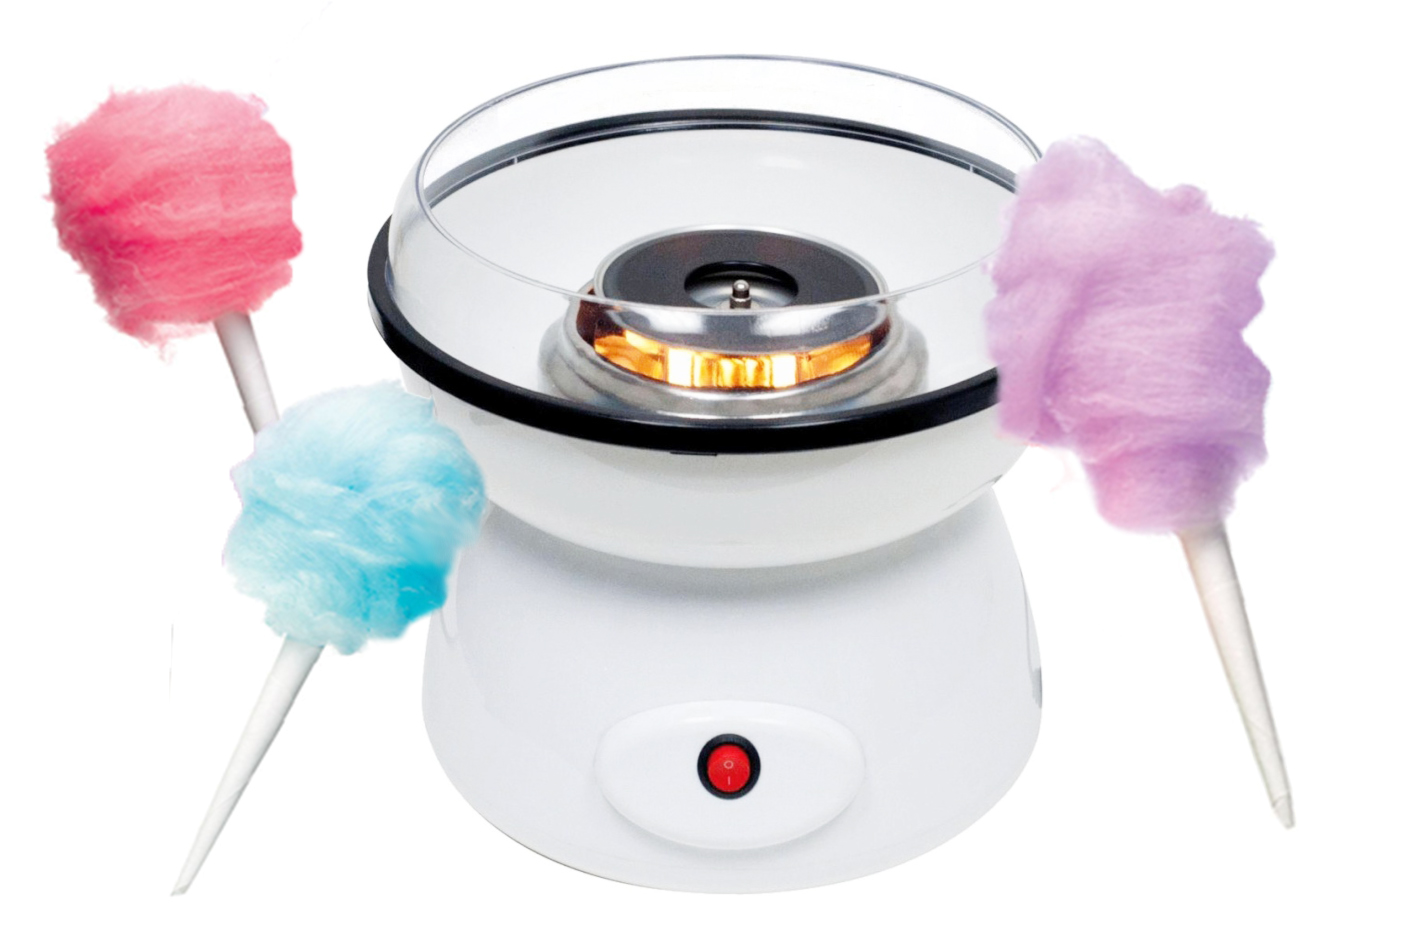 DIY Home cotton candy machine